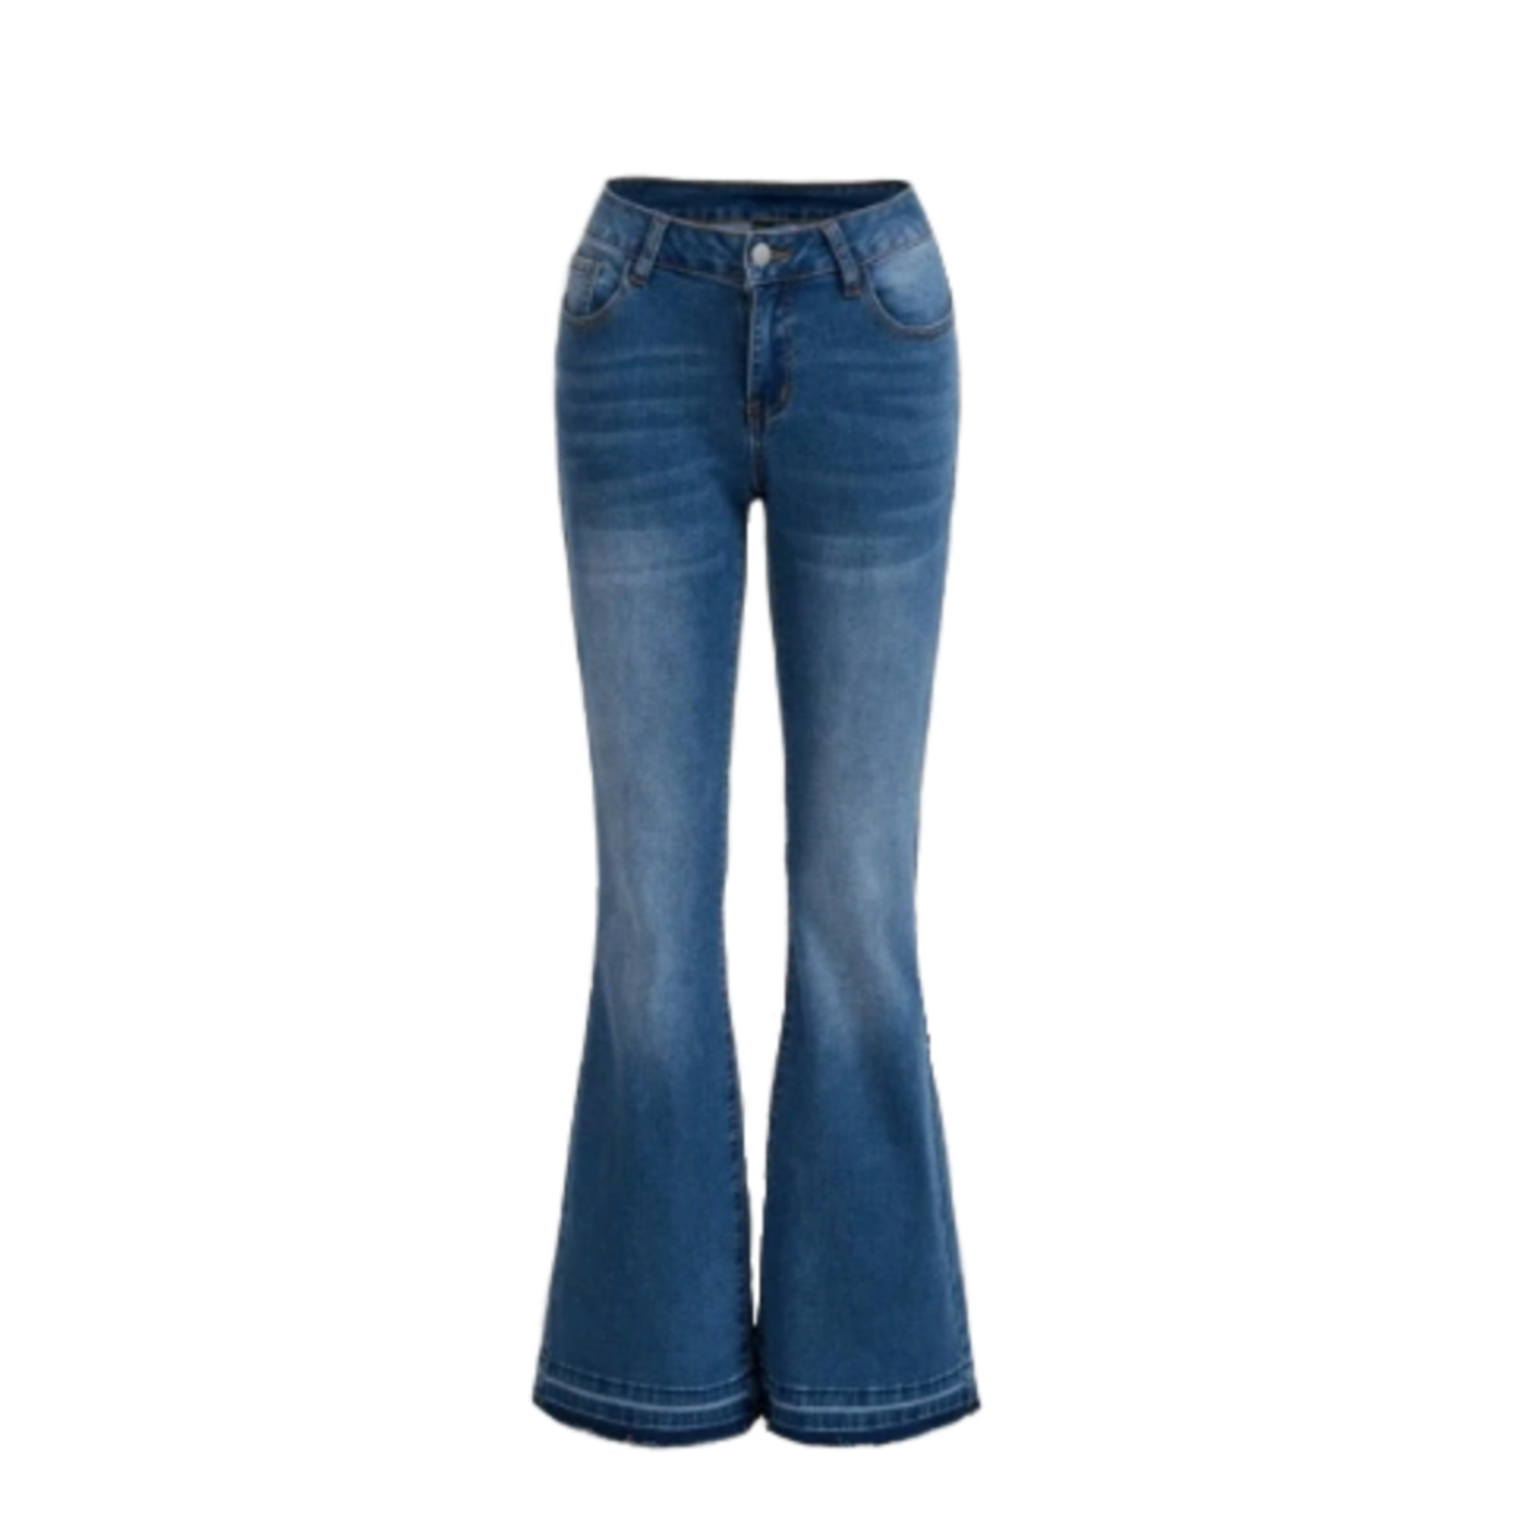 jeans bellbottoms bootcutjeans sticker by @horsegirlm2009